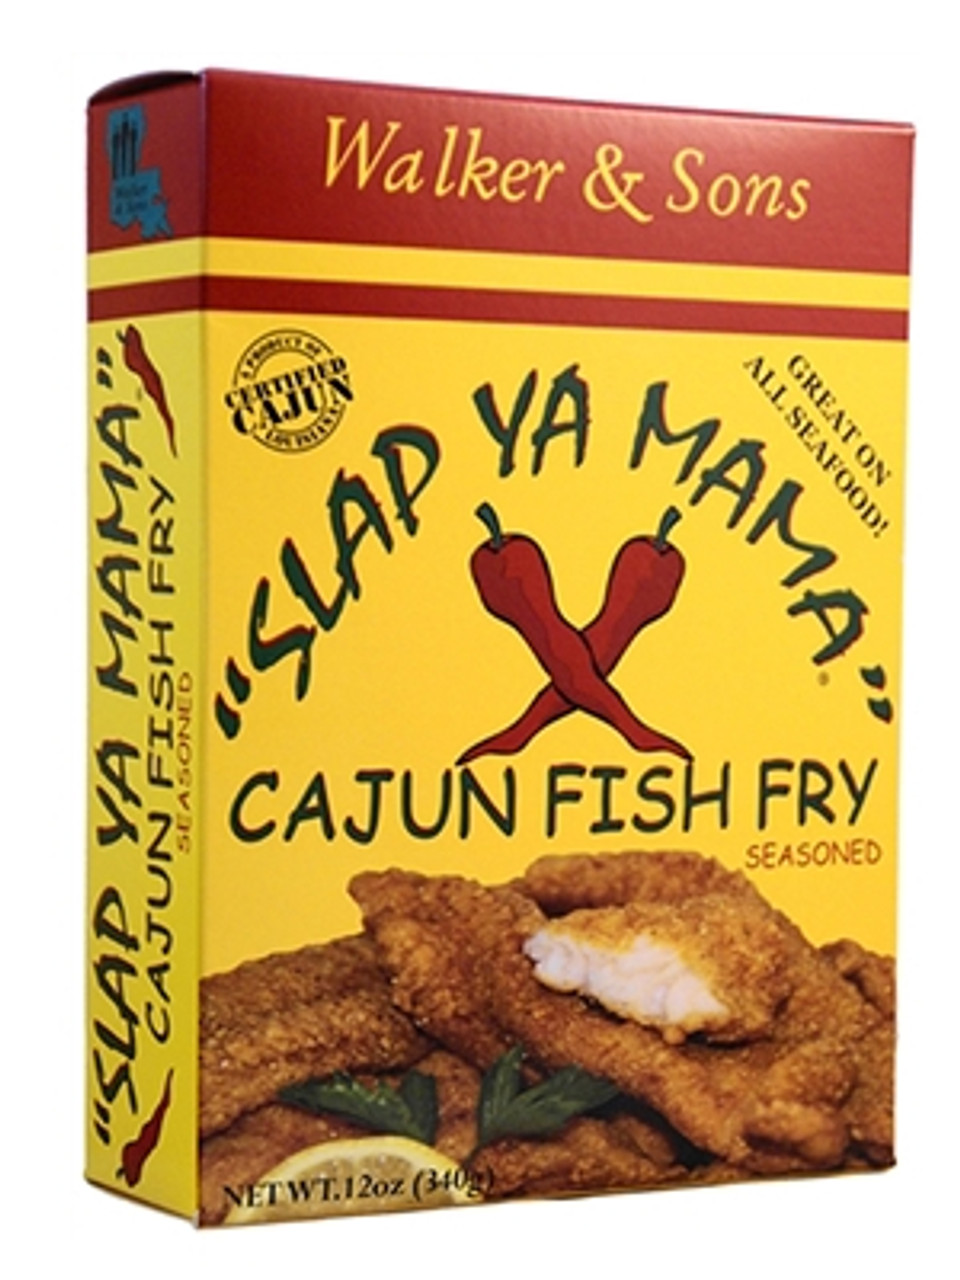 Slap Ya Mama Louisiana Food Products - Looking for a great